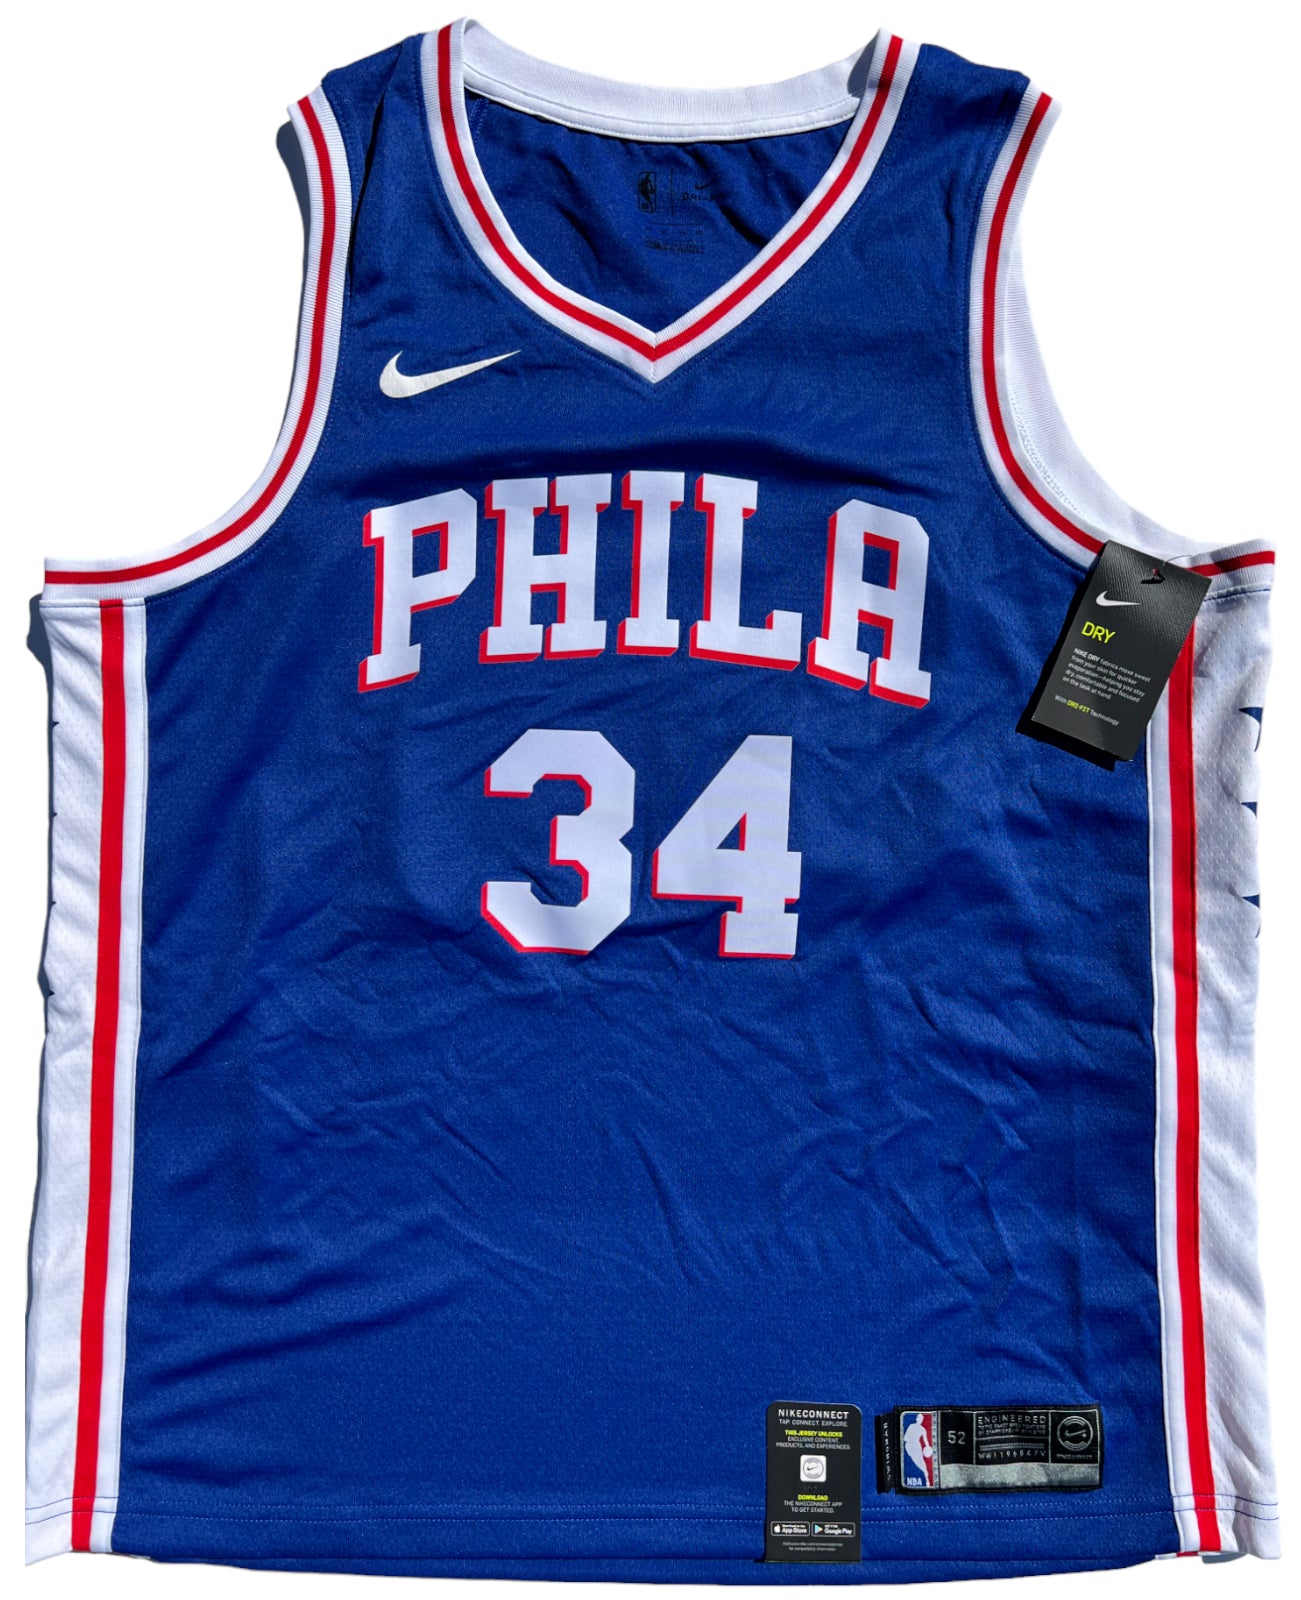 Nike Philadelphia 76ers NBA Jerseys for sale